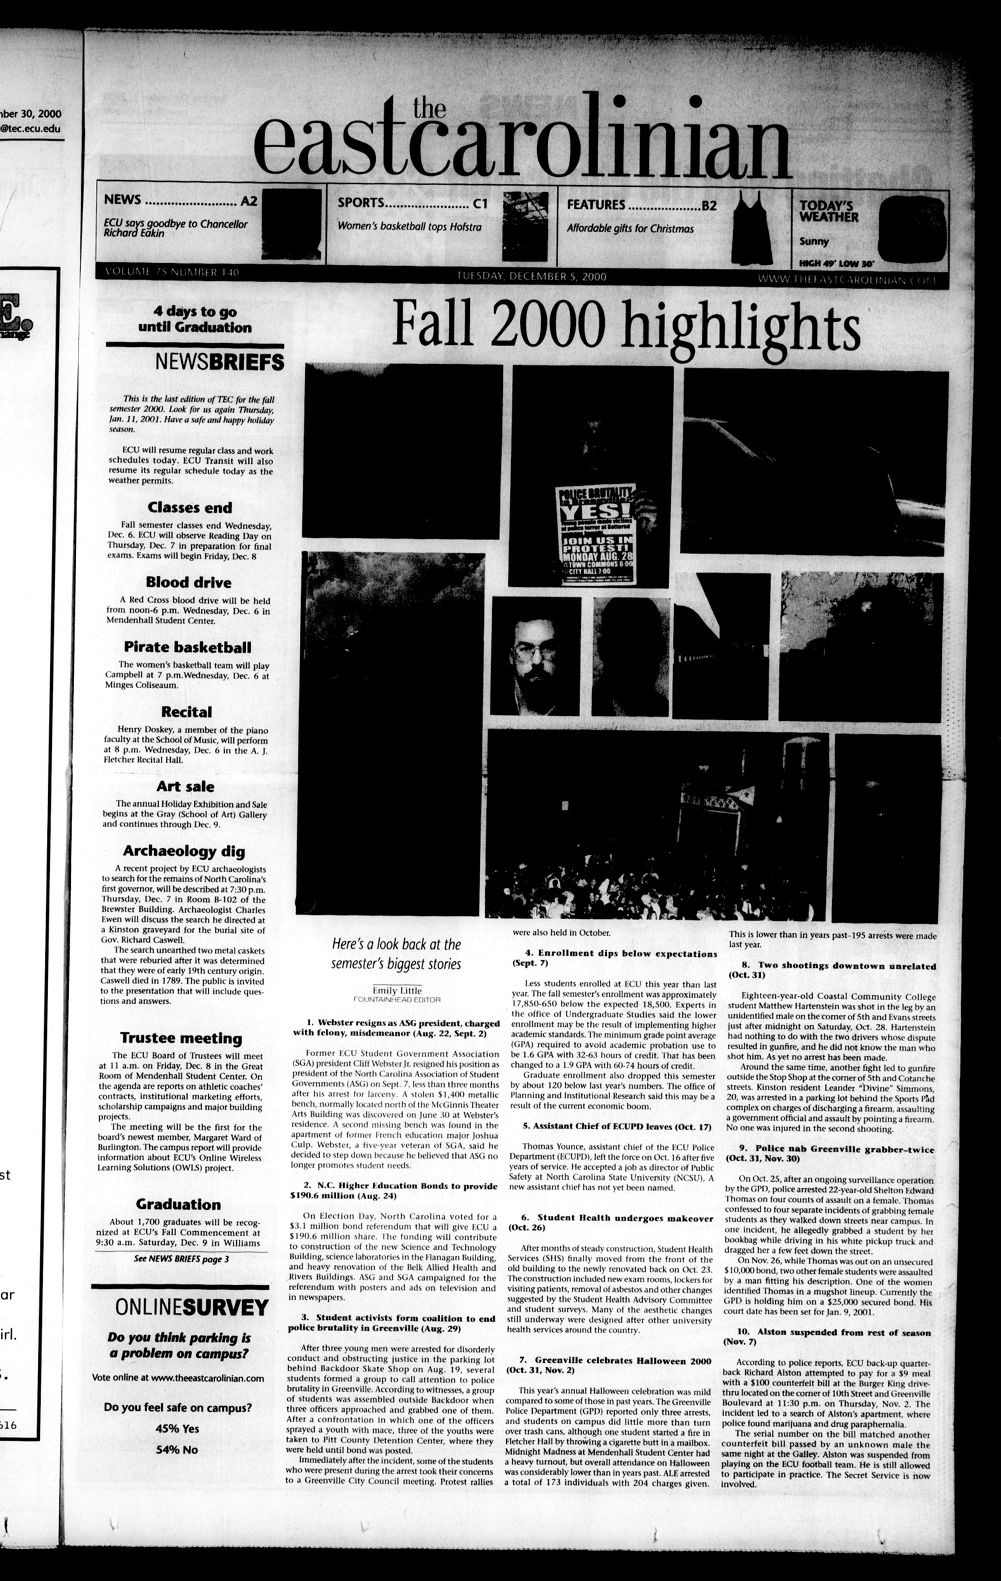 The East Carolinian, December 5, 2000